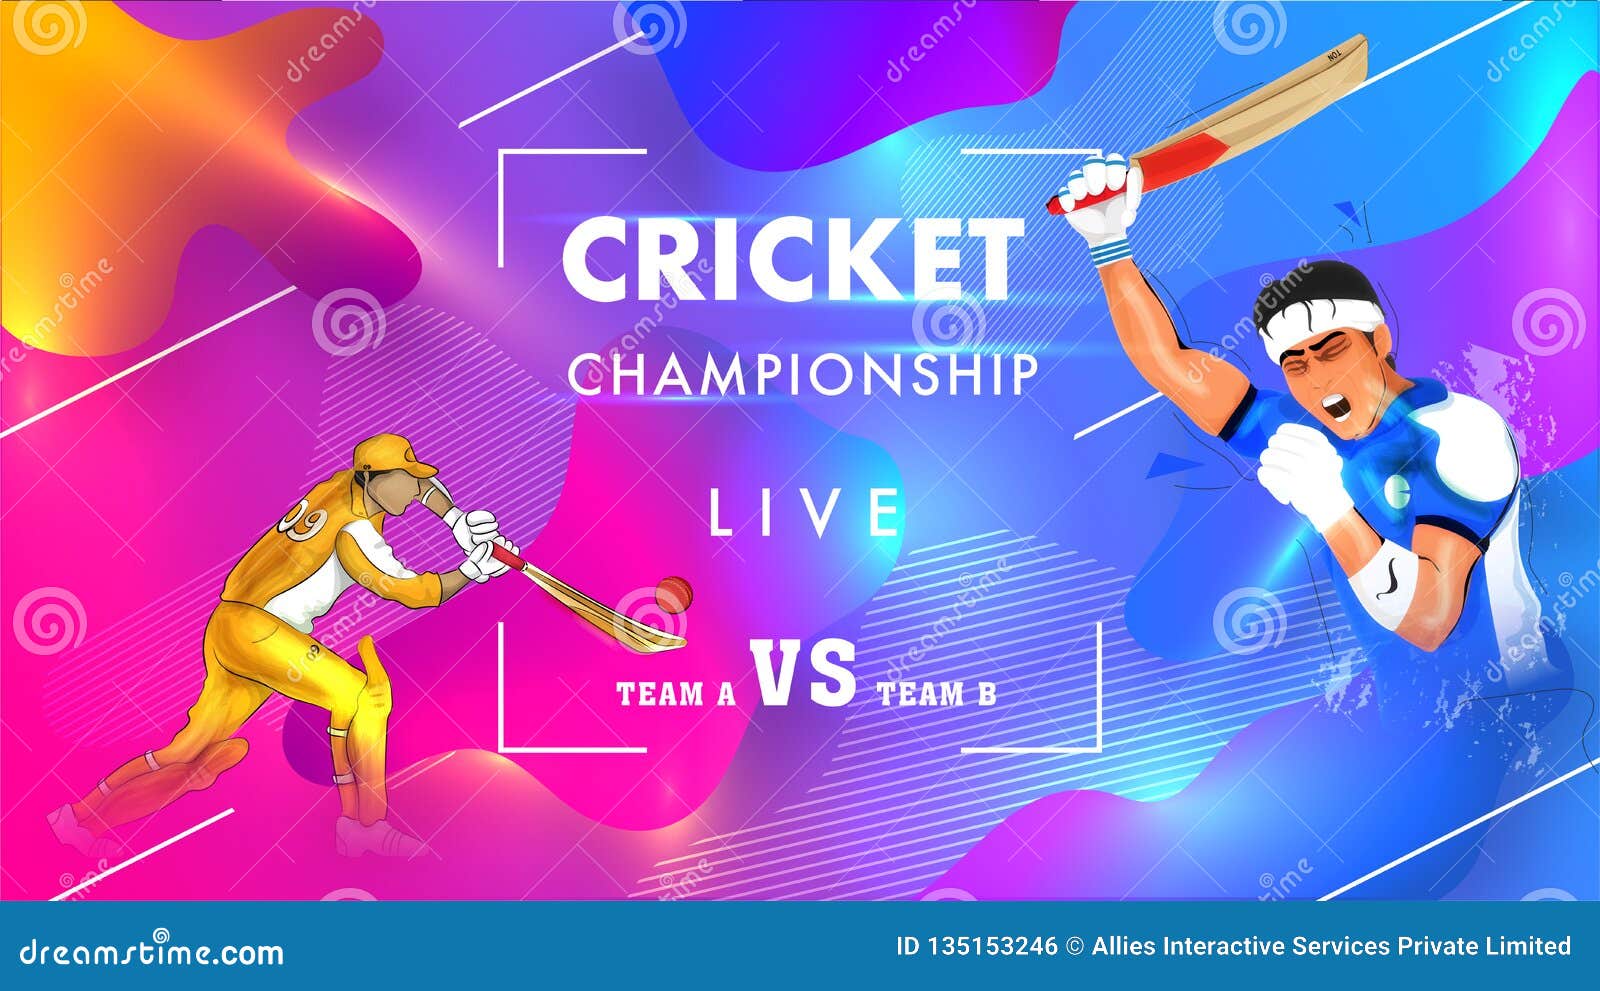 Live Cricket Championship Poster